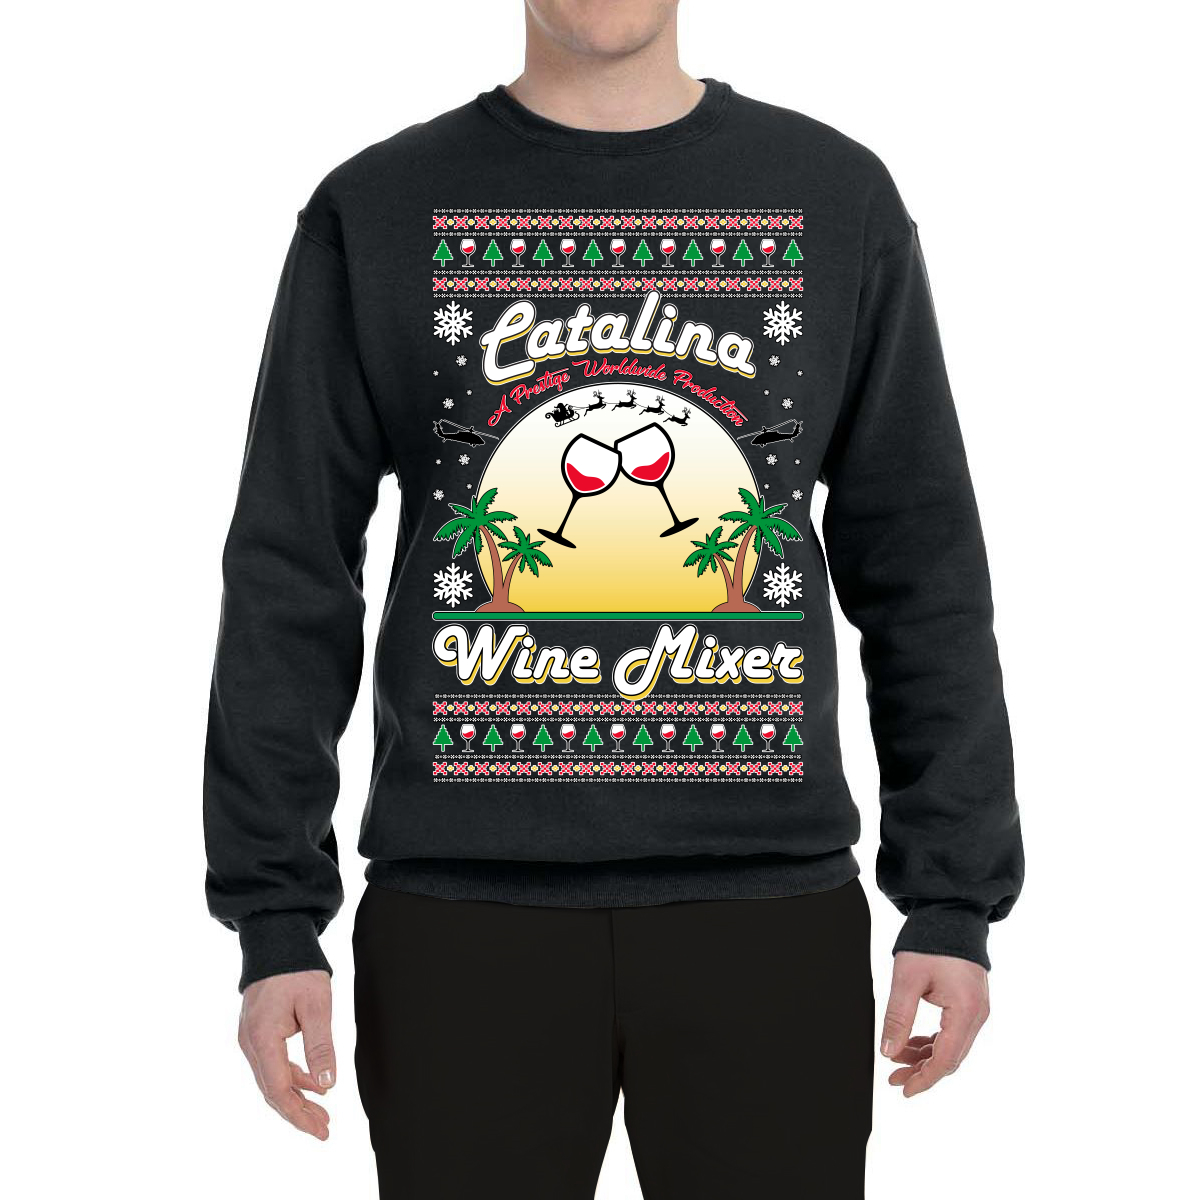 Wild Bobby, Step Bros Catalina Wine Mixer Xmas Holiday Movie Humor Ugly Christmas Sweater Unisex Crewneck Graphic Sweatshirt, Black, Small - image 2 of 5